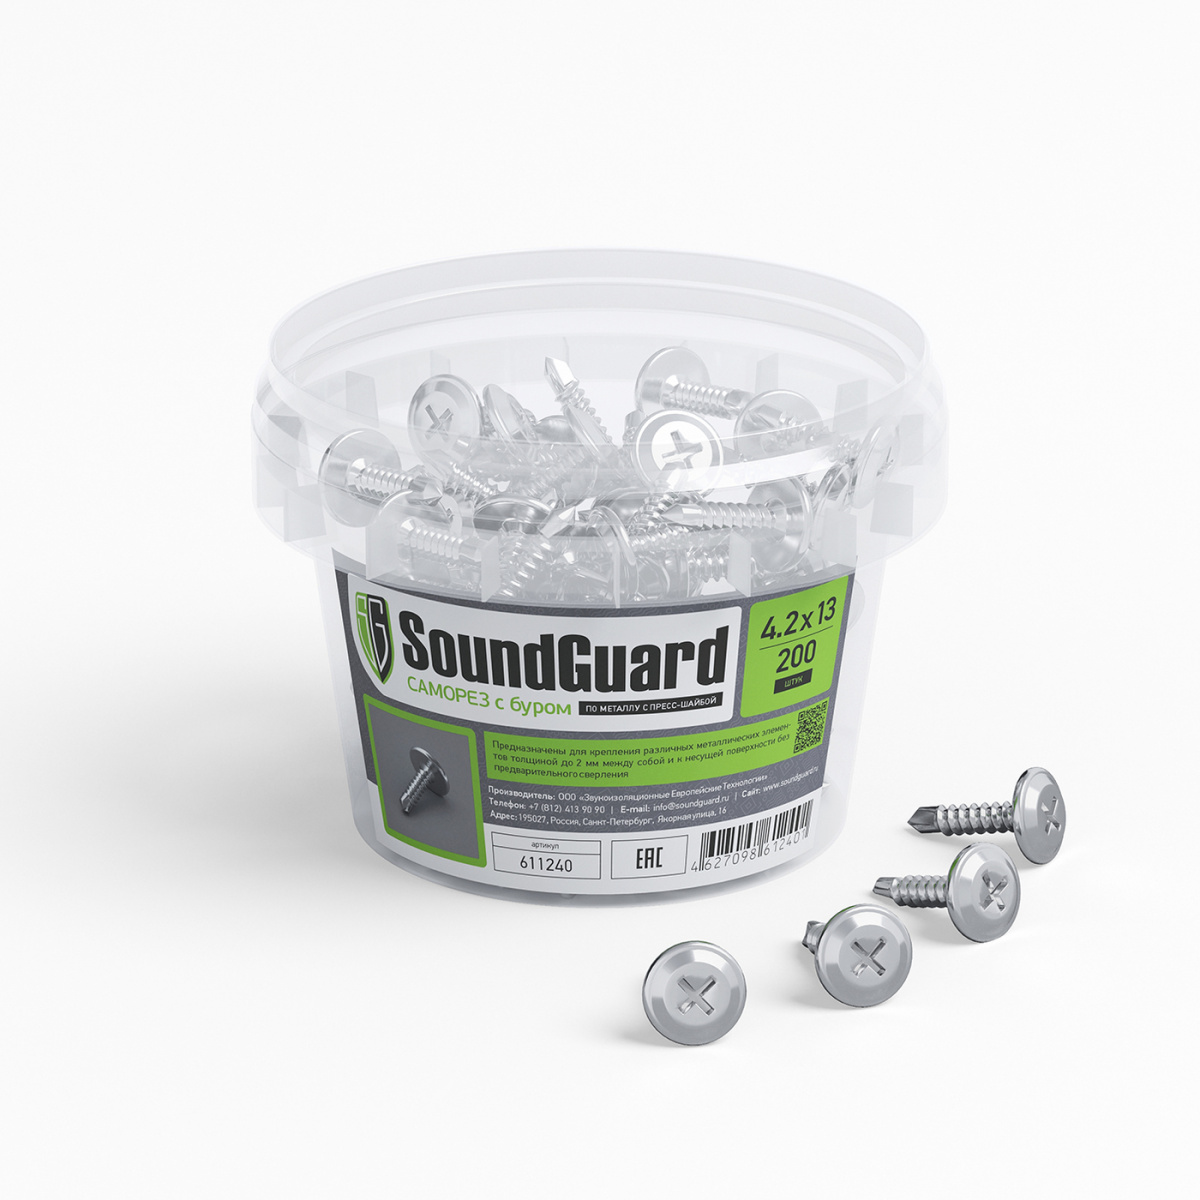 Саморезы SoundGuard с буром 4,2х13 (200 штук), Саморезы SoundGuard с буром 4,2х13 (200 штук)